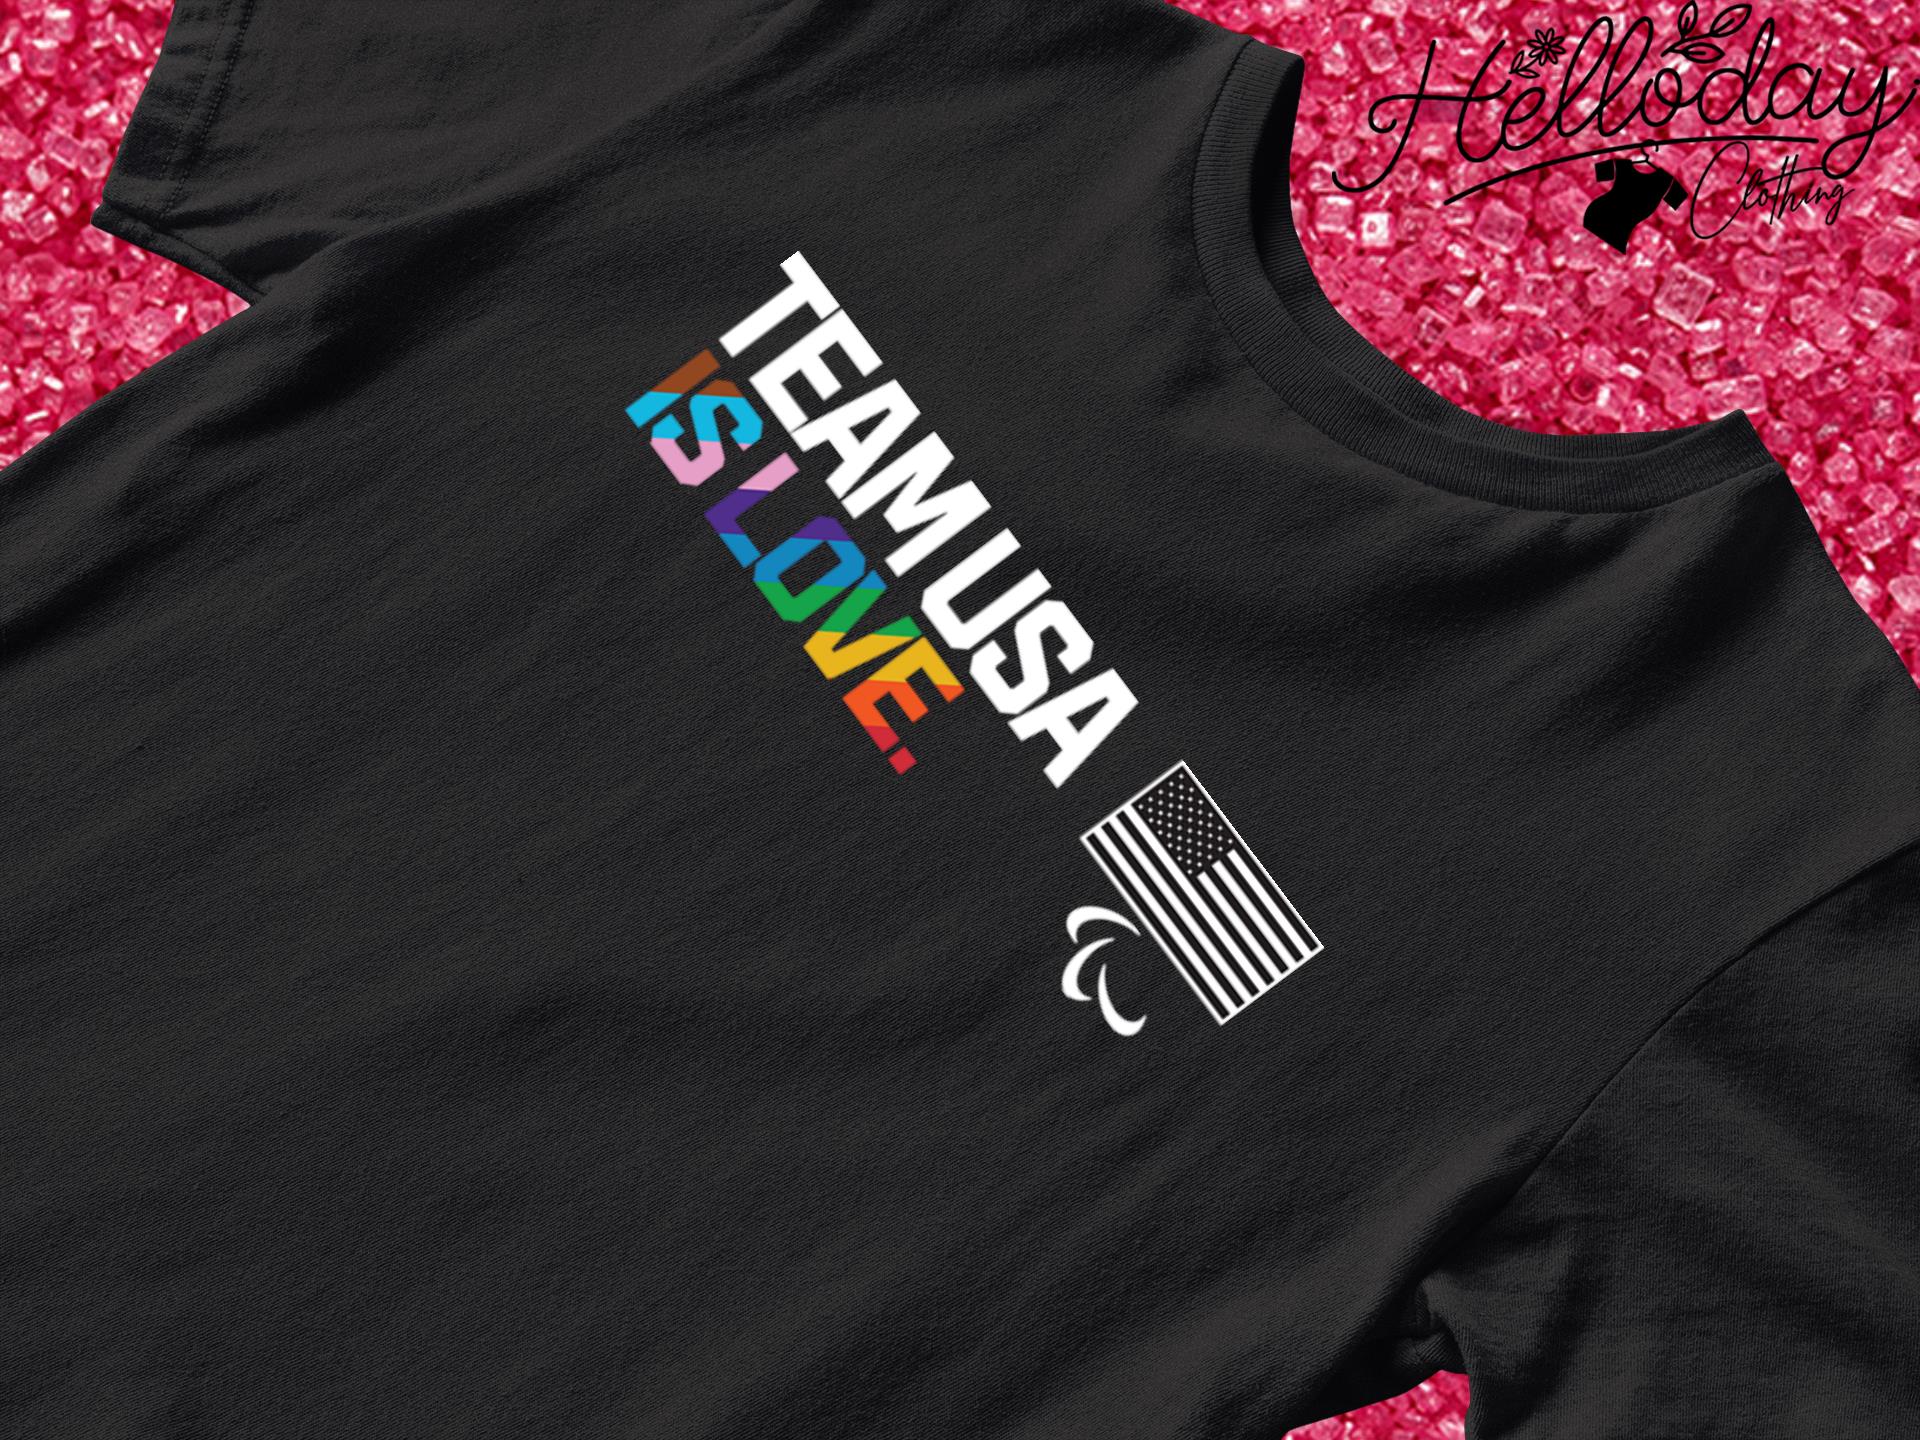 Team USA Paralympics LGBT Pride shirt